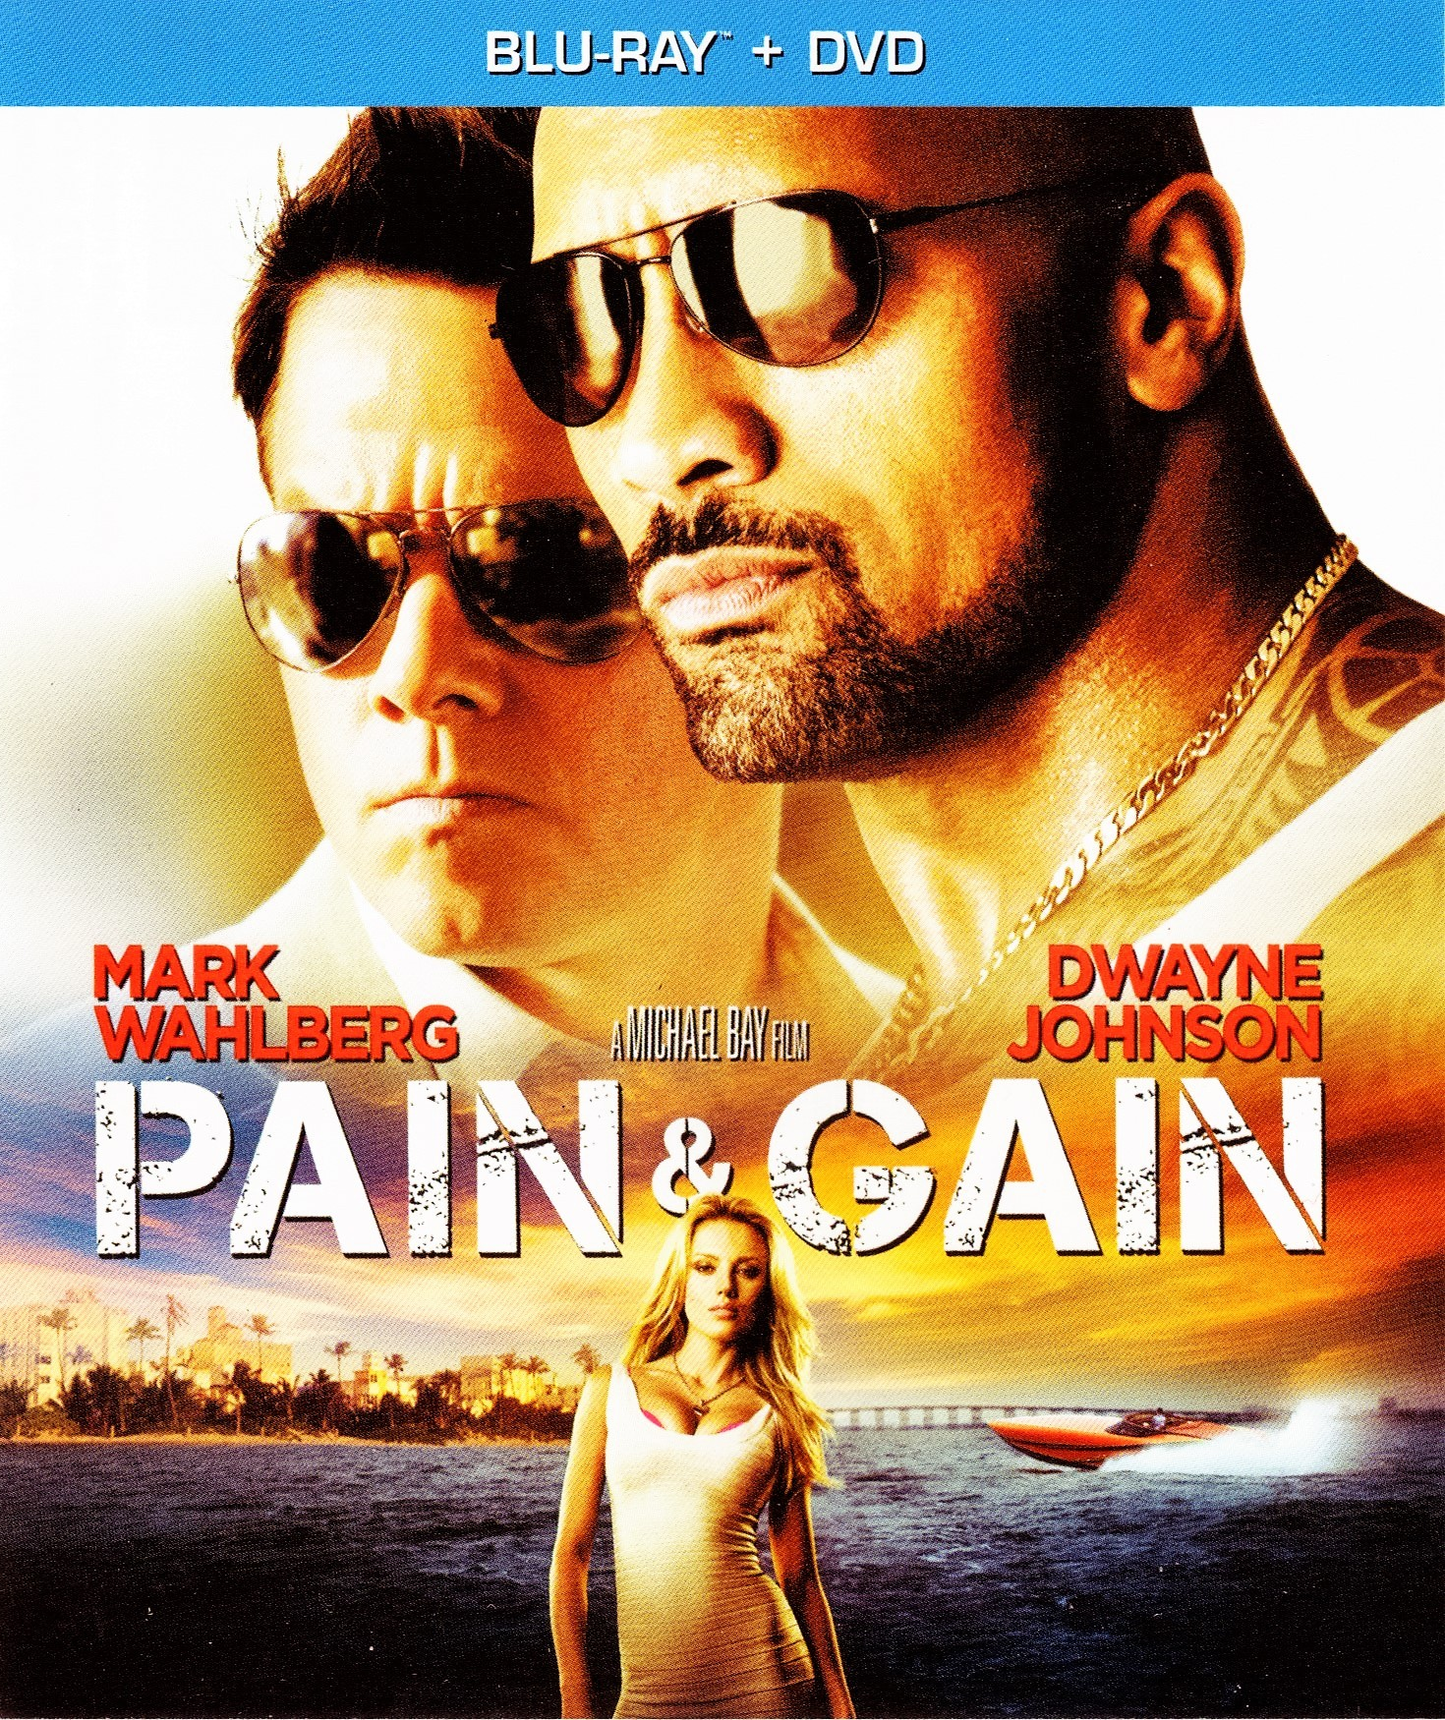 Pain & Gain - Blu-ray Comedy 2013 R